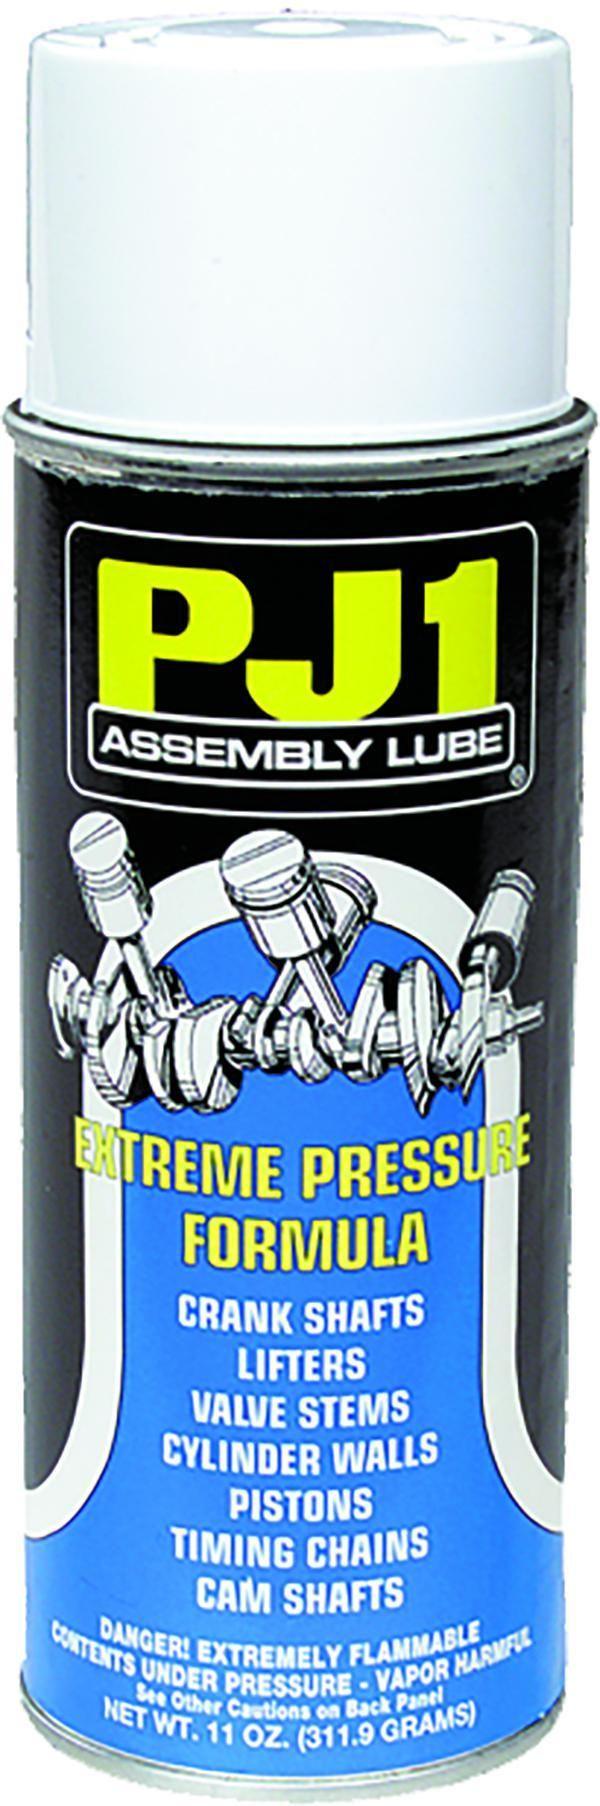 3JL2-PJ1-SP-701 Assembly Lube - 11 oz. net wt. - Aerosol